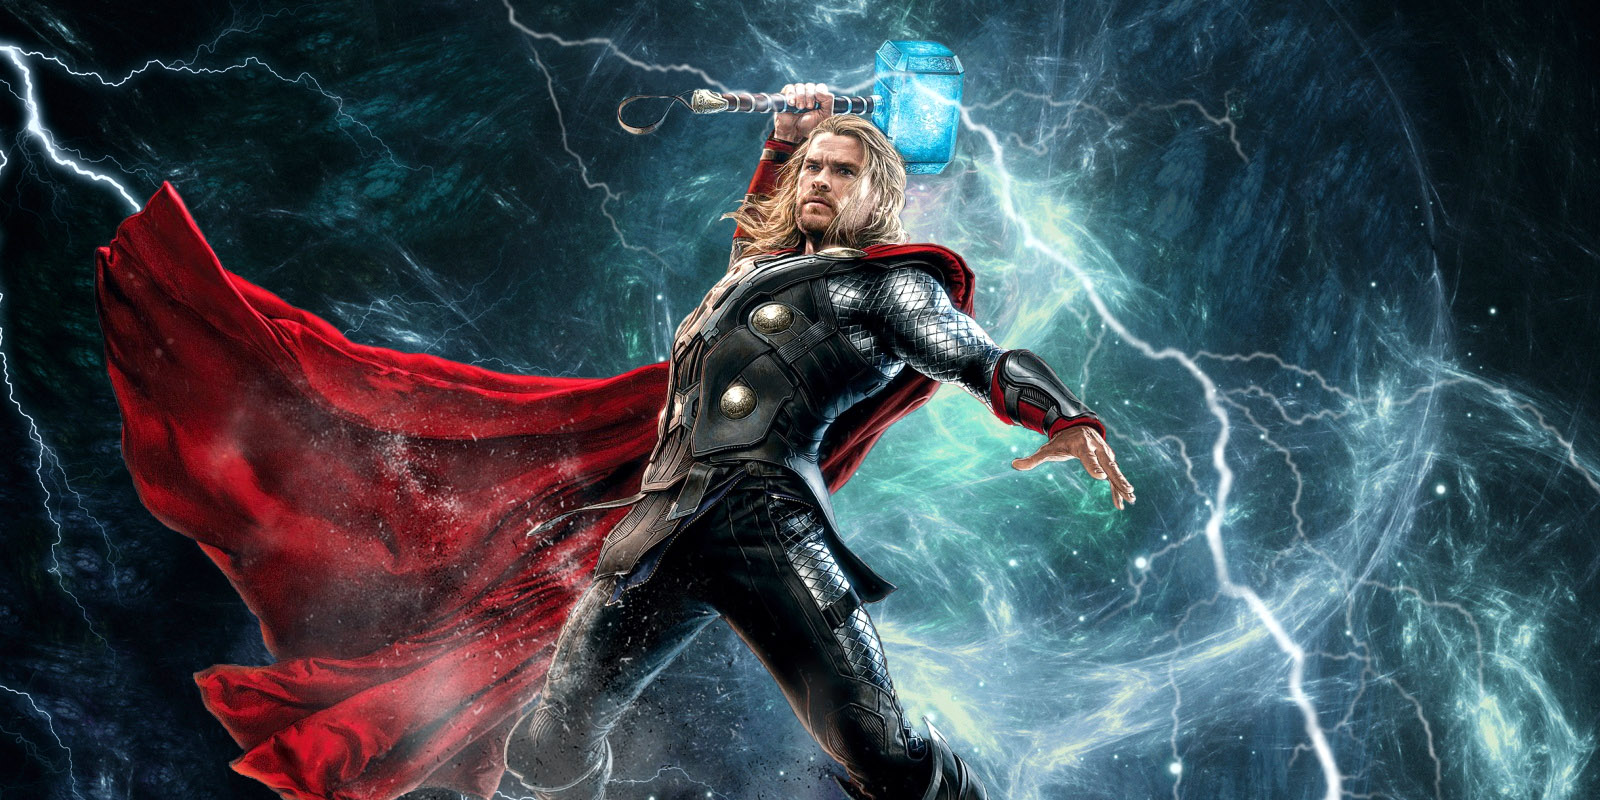  (Video) Surge divertido video de Thor reclamando no haber sido parte de ‘Civil War’